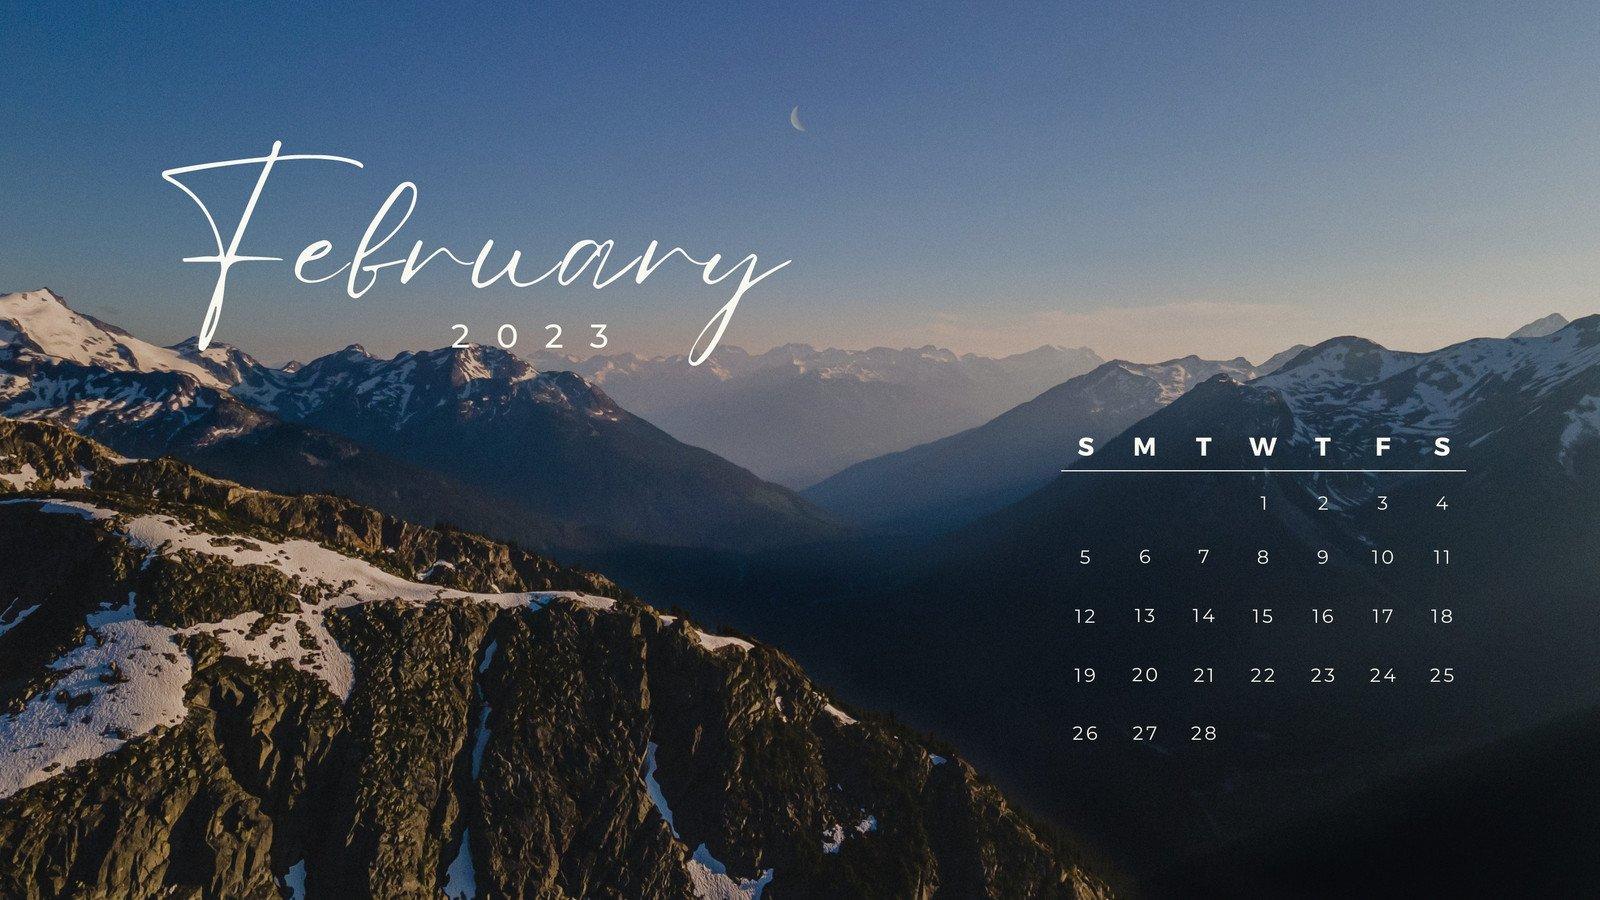 February 2023 Calendar Wallpapers Top Free February 2023 Calendar